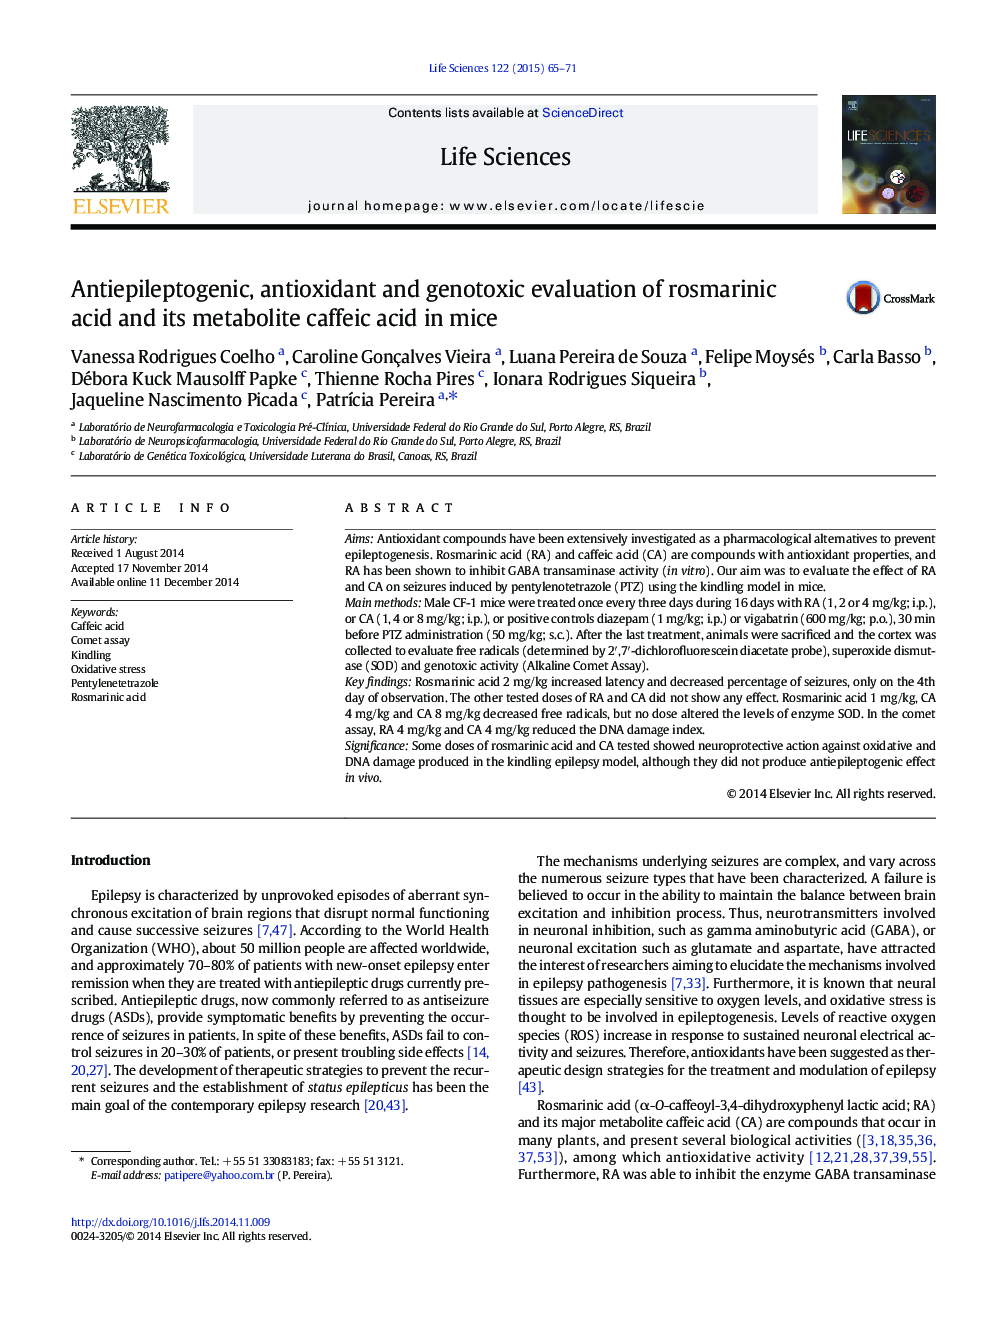 Antiepileptogenic, antioxidant and genotoxic evaluation of rosmarinic acid and its metabolite caffeic acid in mice